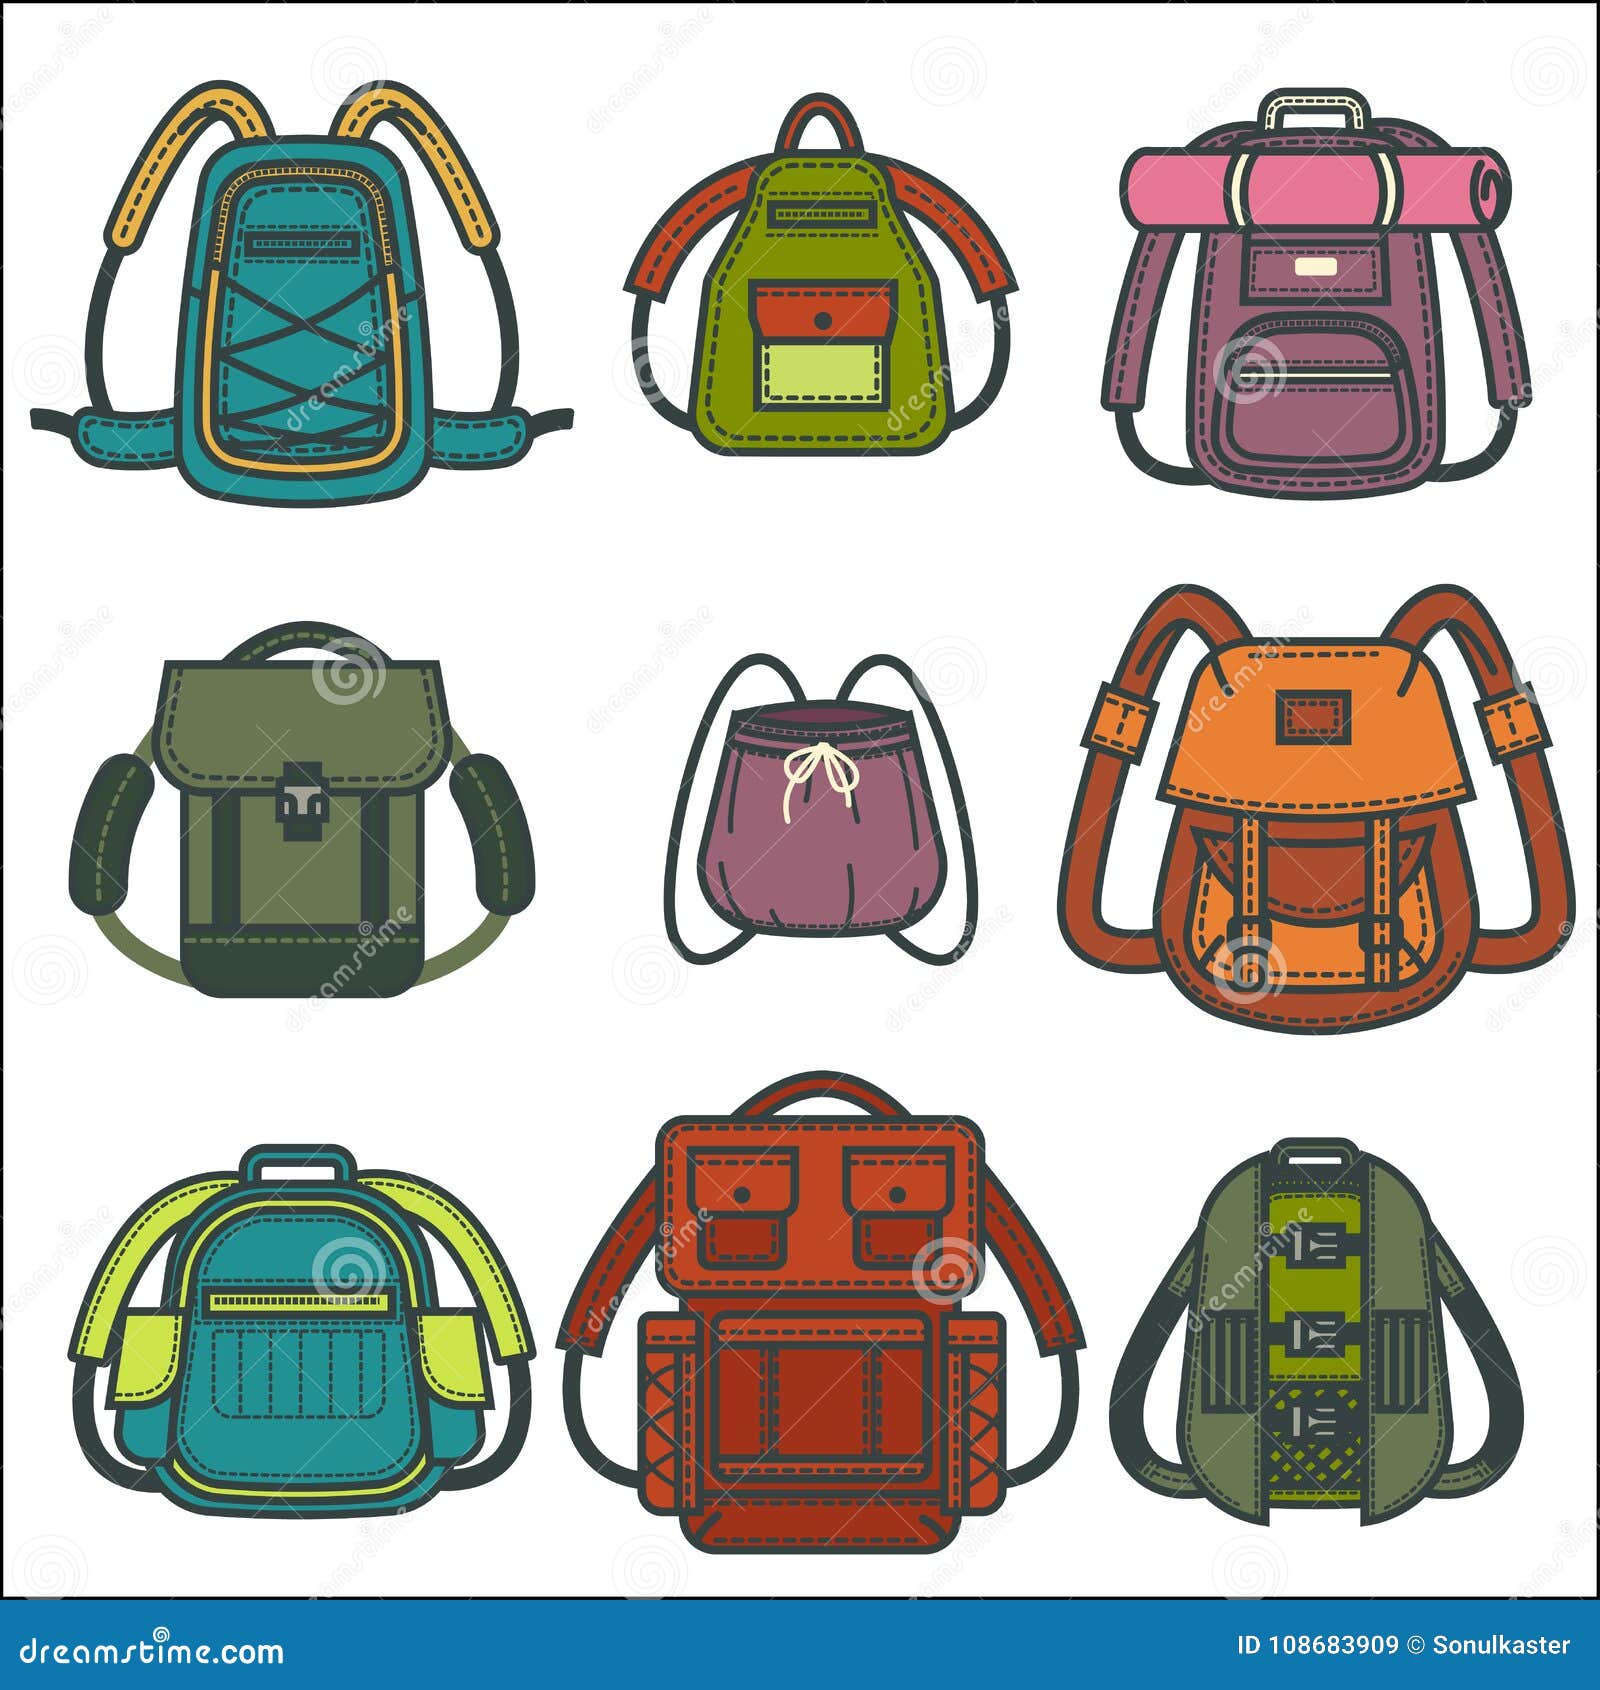 Youth Words Motivation Bookbag School Backpack Luggage Travel Sport Bag